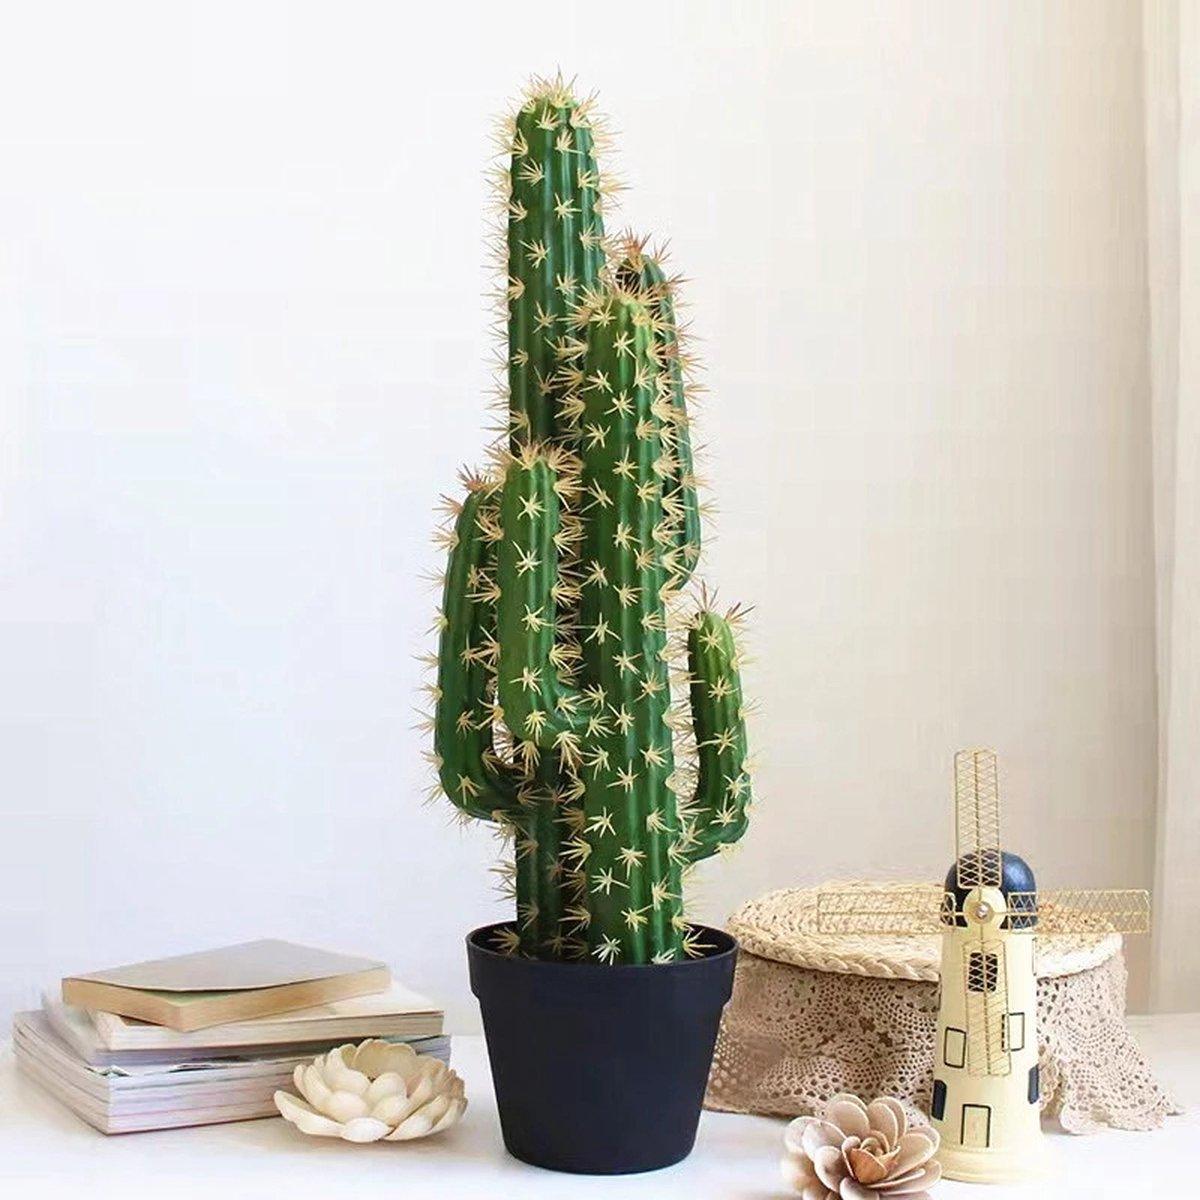 Simple Solutions kunst cactus